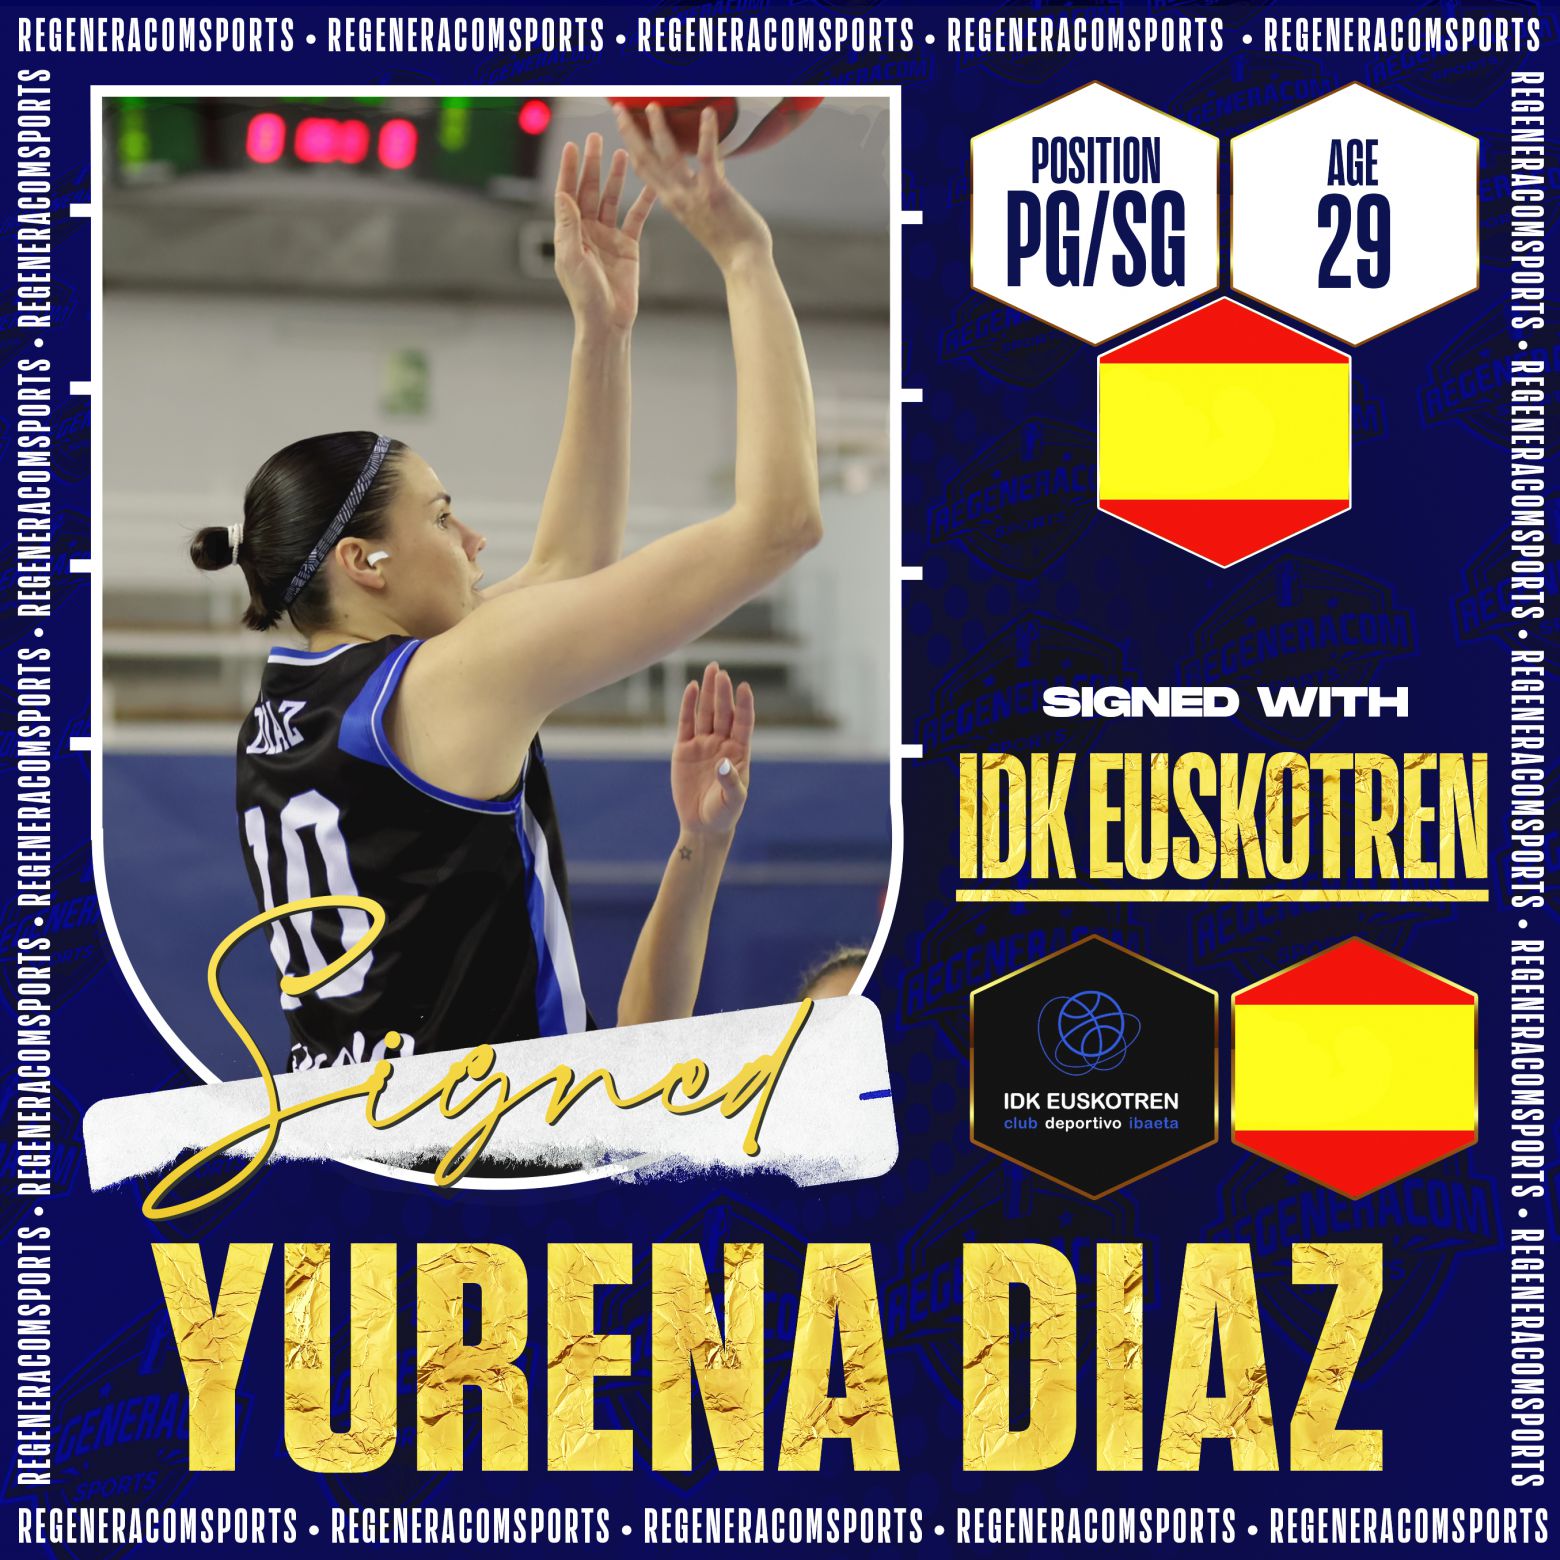 YURENA DÍAZ has re-signed with IDK Euskotren